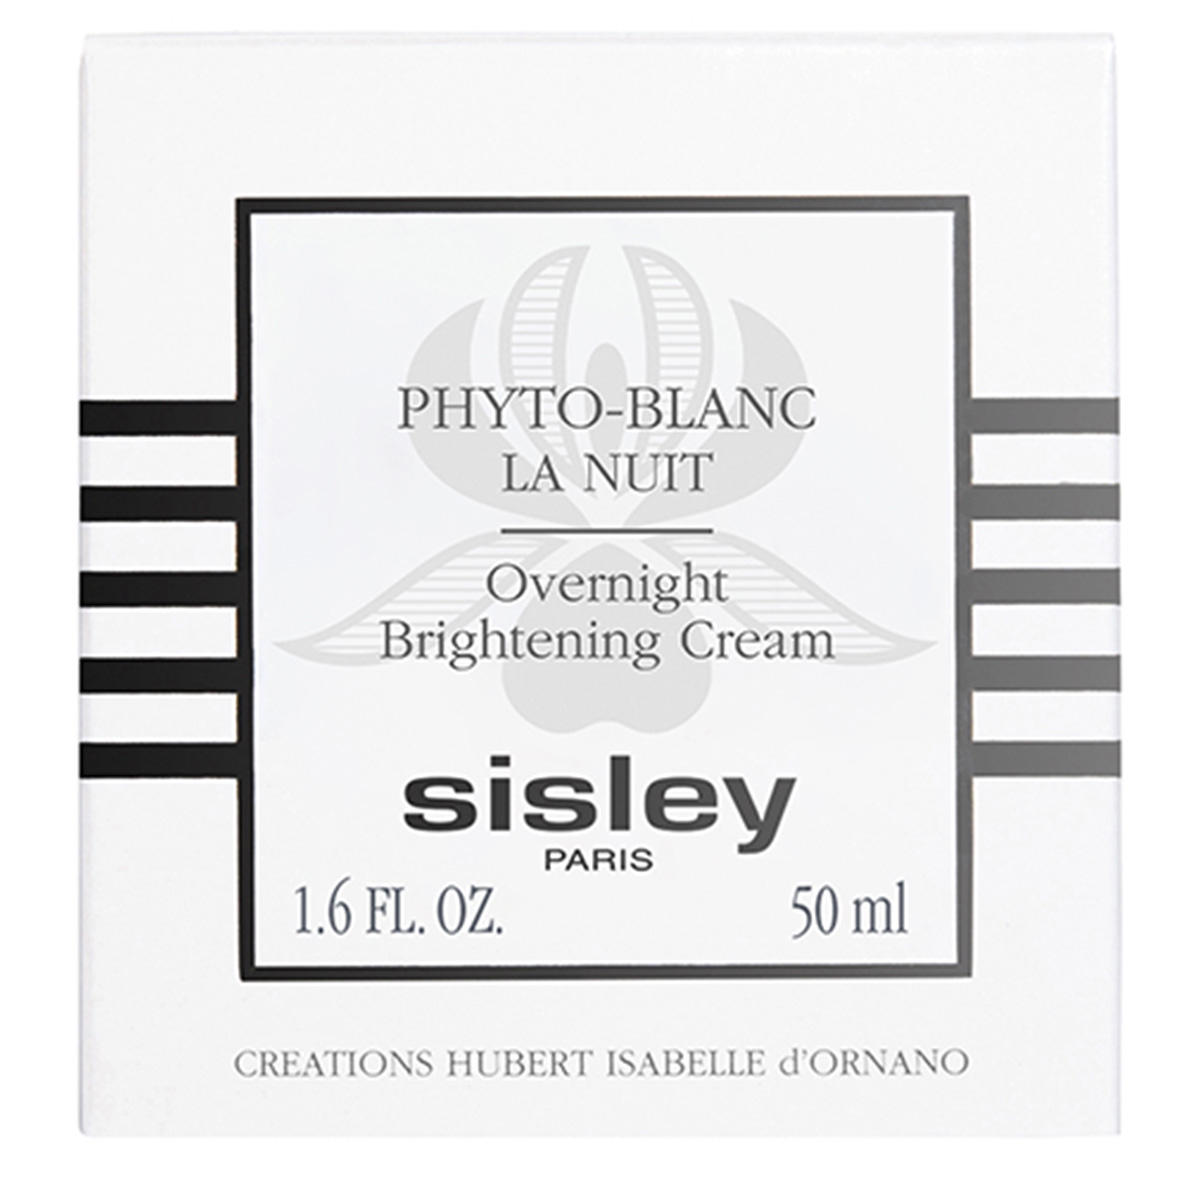 Sisley Paris Phyto-Blanc La Nuit 50 ml - 2